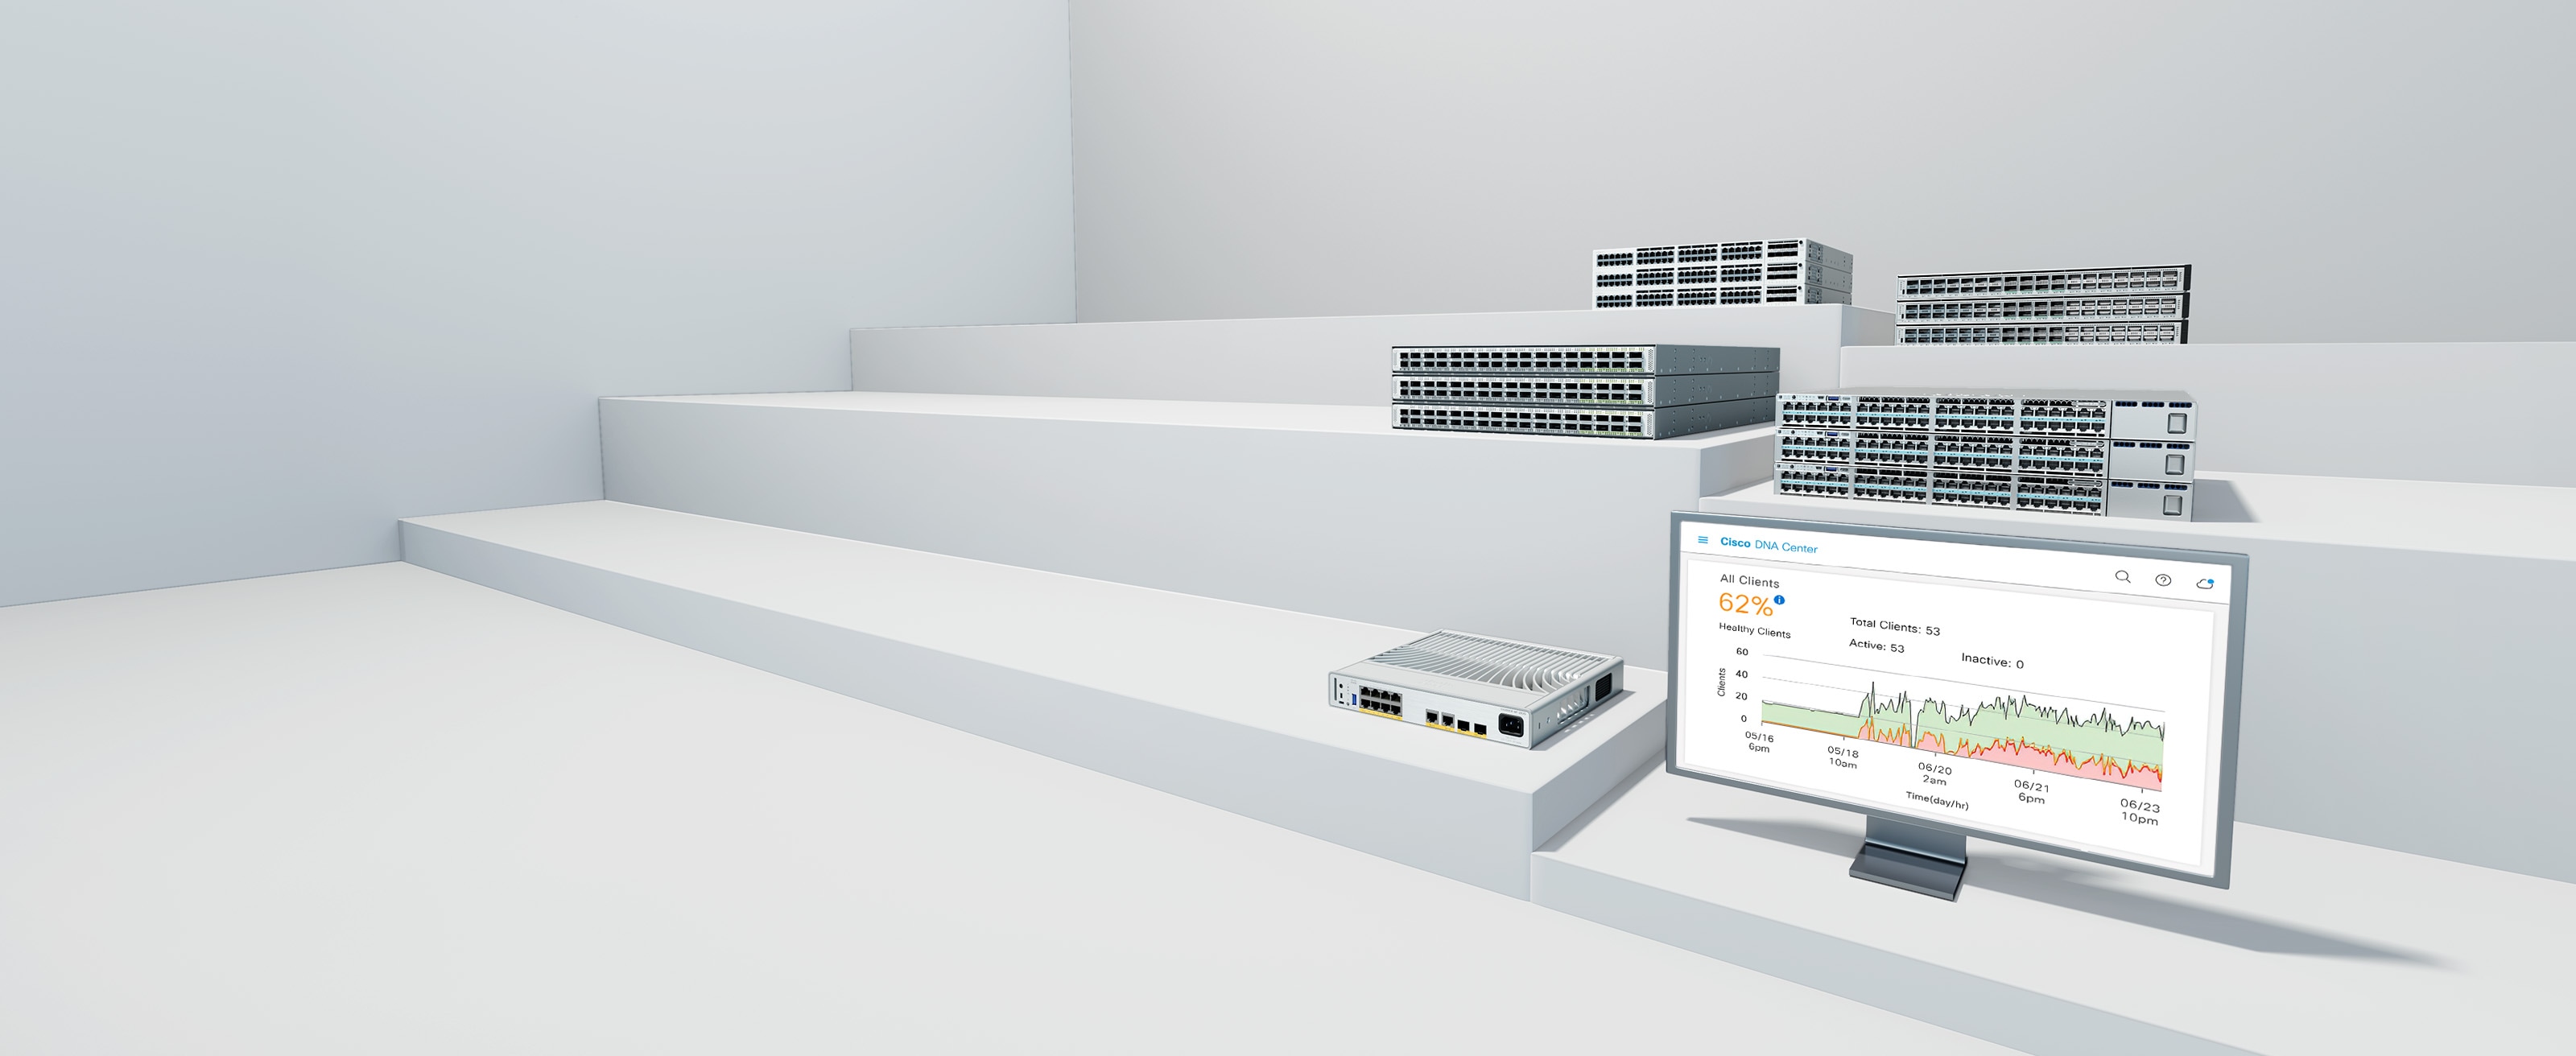 Cisco Catalyst, Cisco Meraki, and Cisco Nexus switches with Cisco Catalyst Center controller